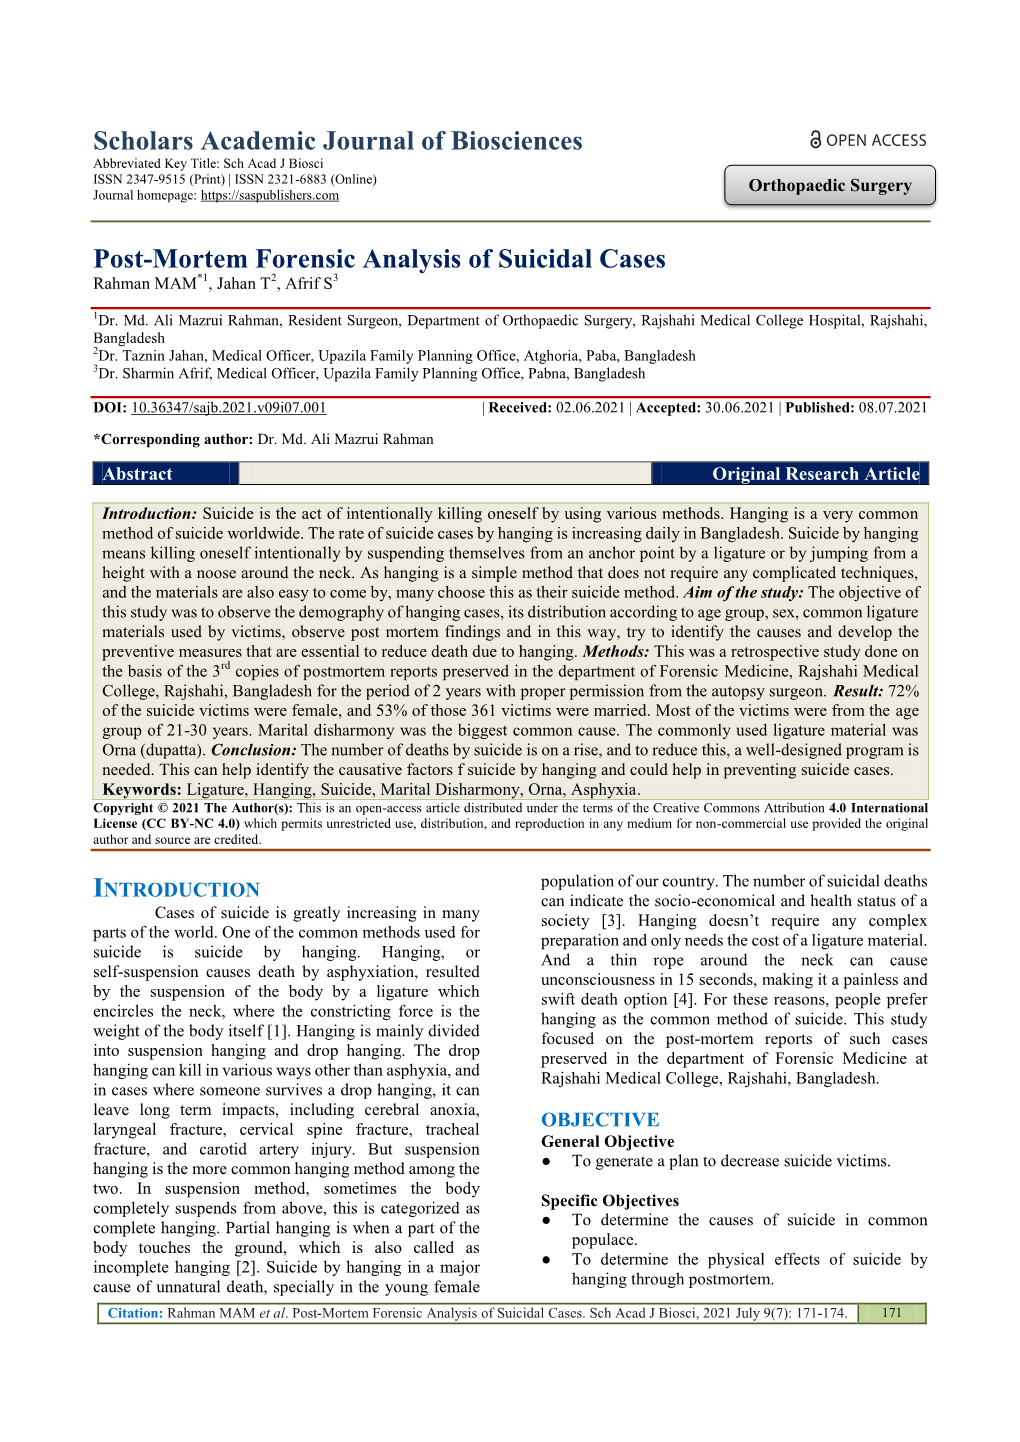 Scholars Academic Journal of Biosciences Post-Mortem Forensic